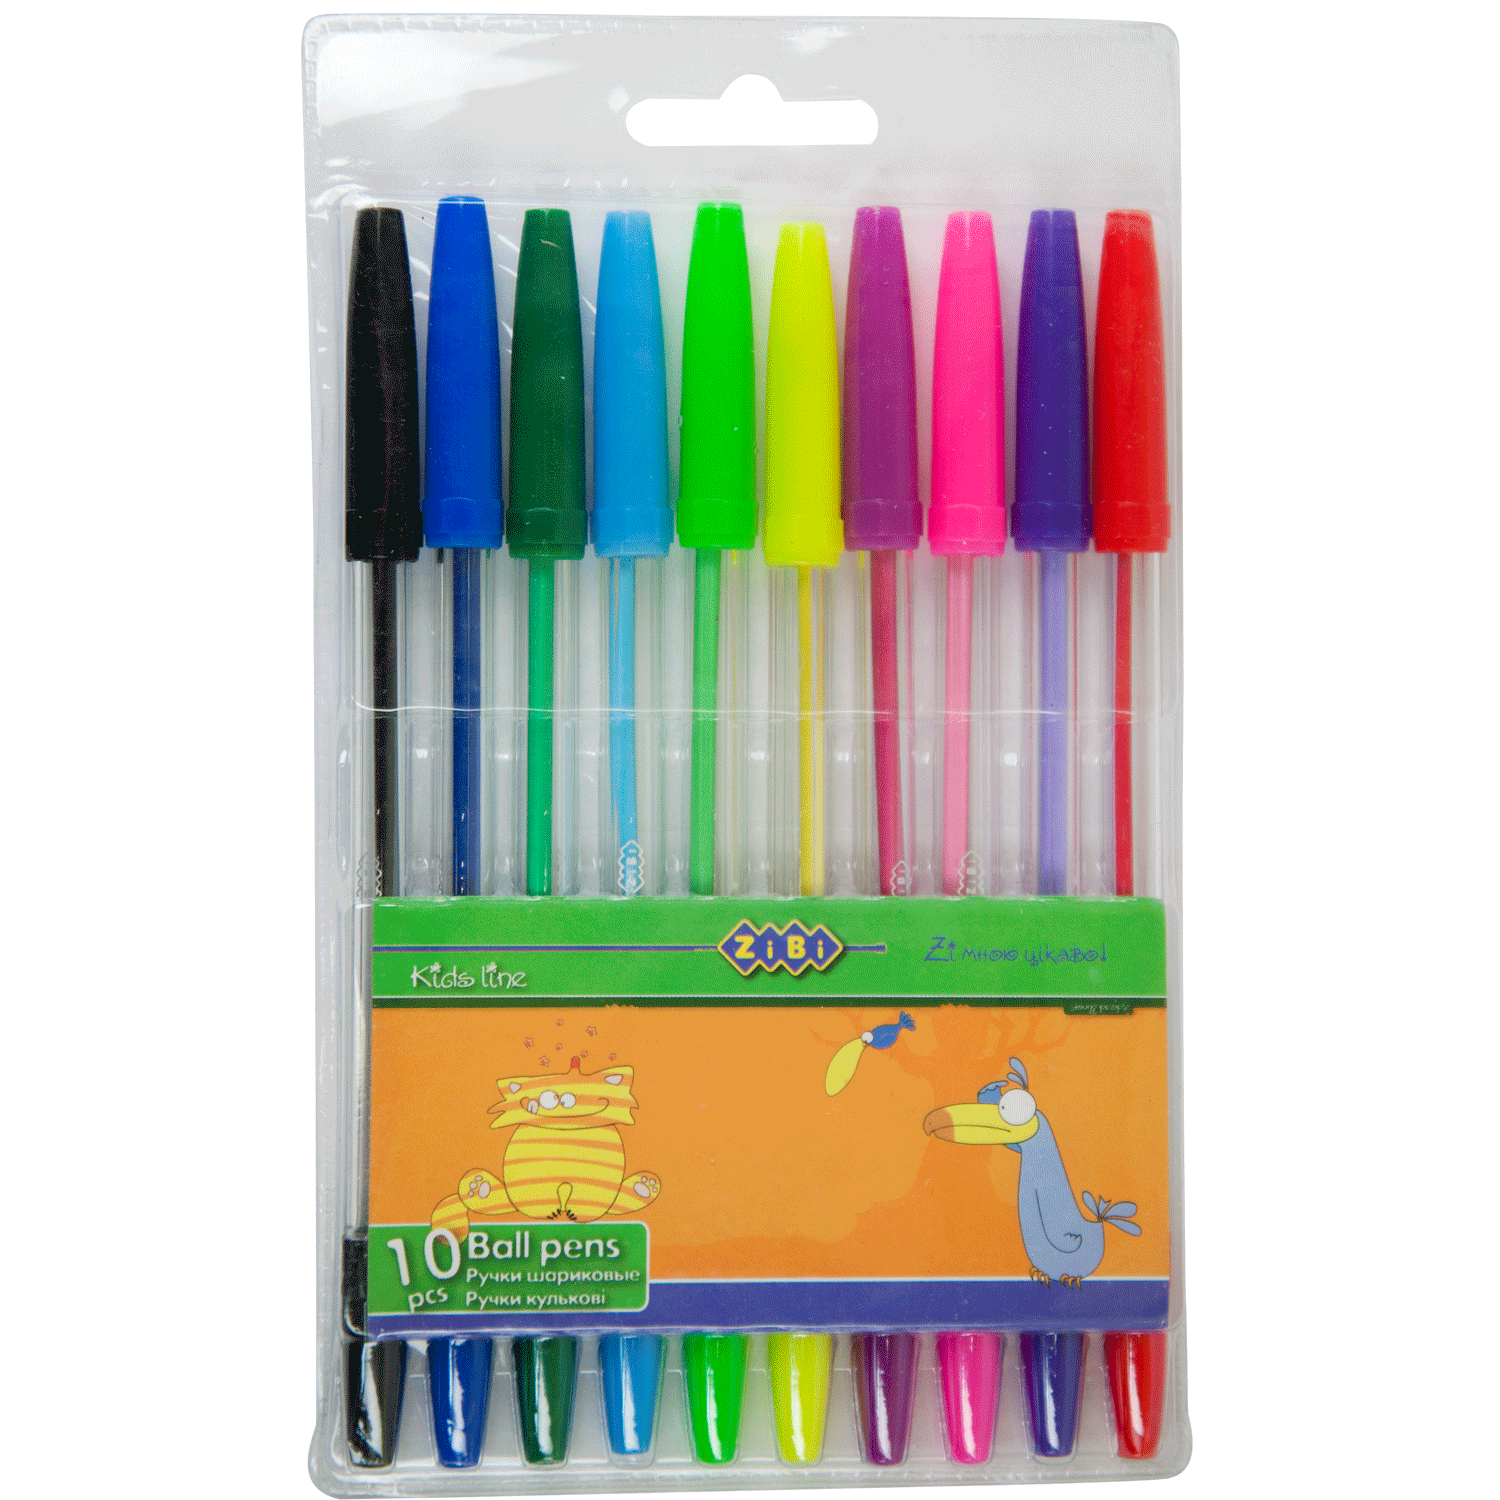 Шариковые ручки ZiBi Kids Line, 10 цветов, 10 шт. (ZB.2012) - фото 1